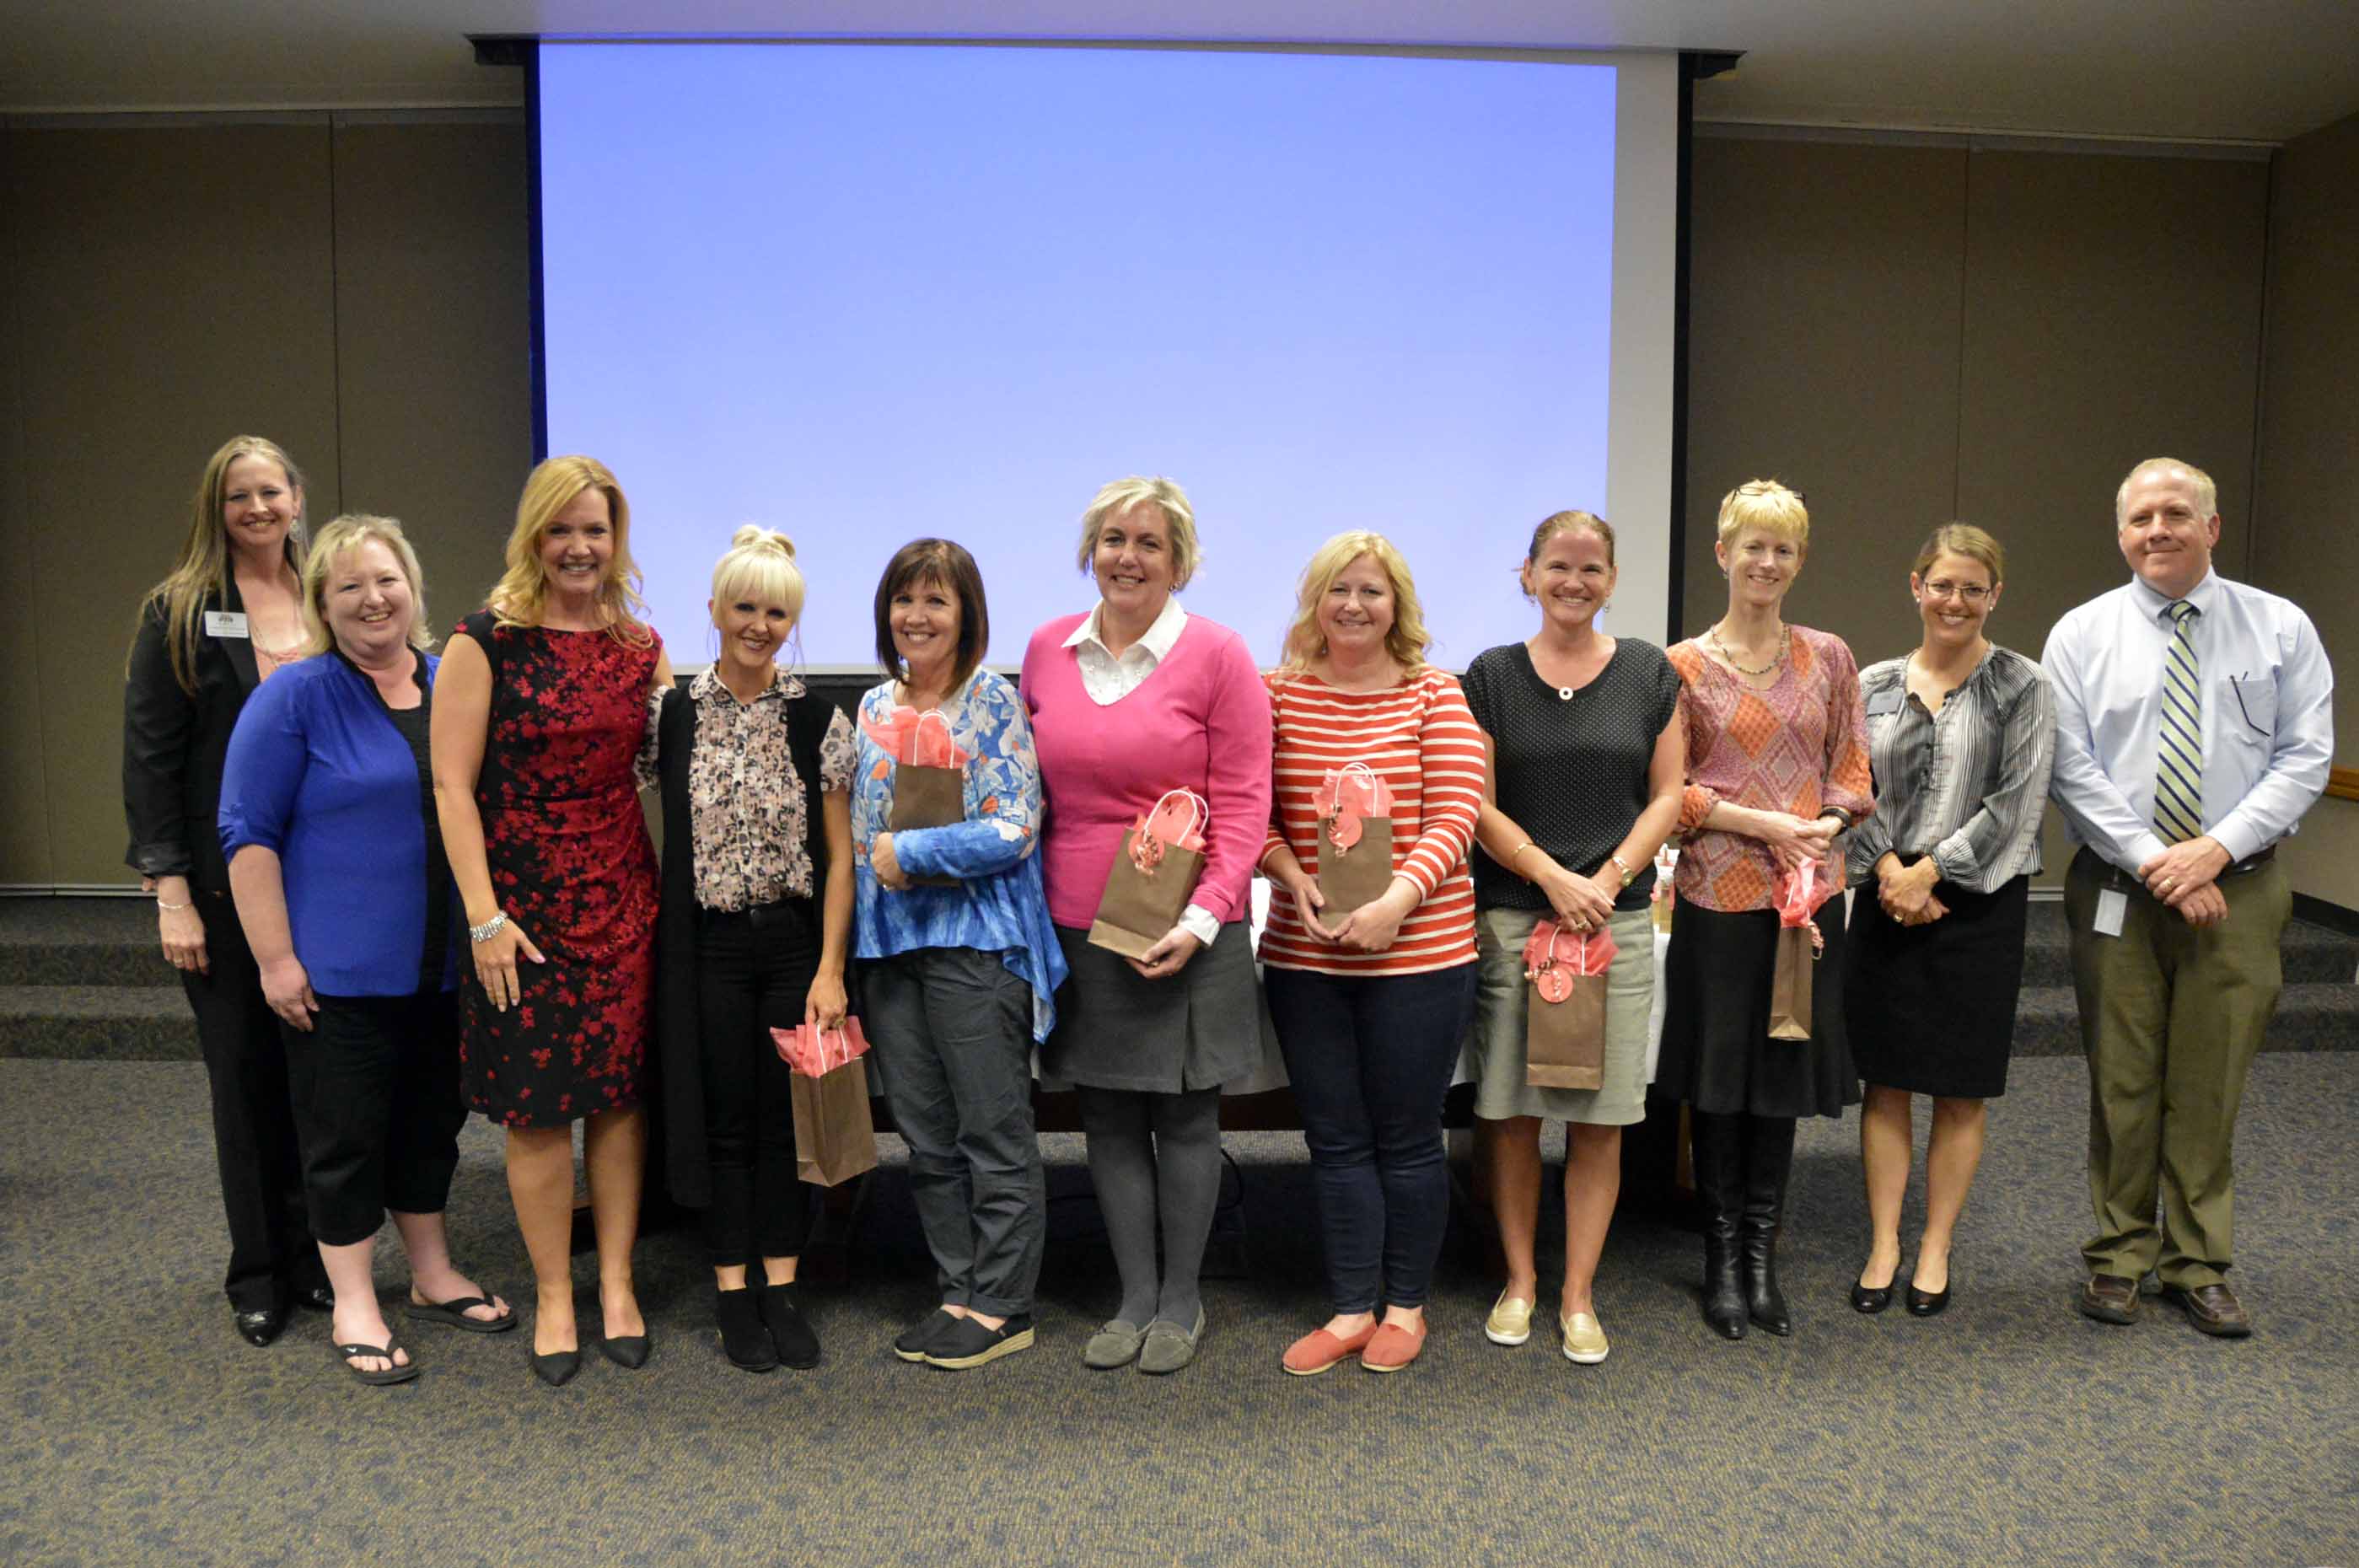 Videos: Region 5 PTA distributes awards to educators and volunteers